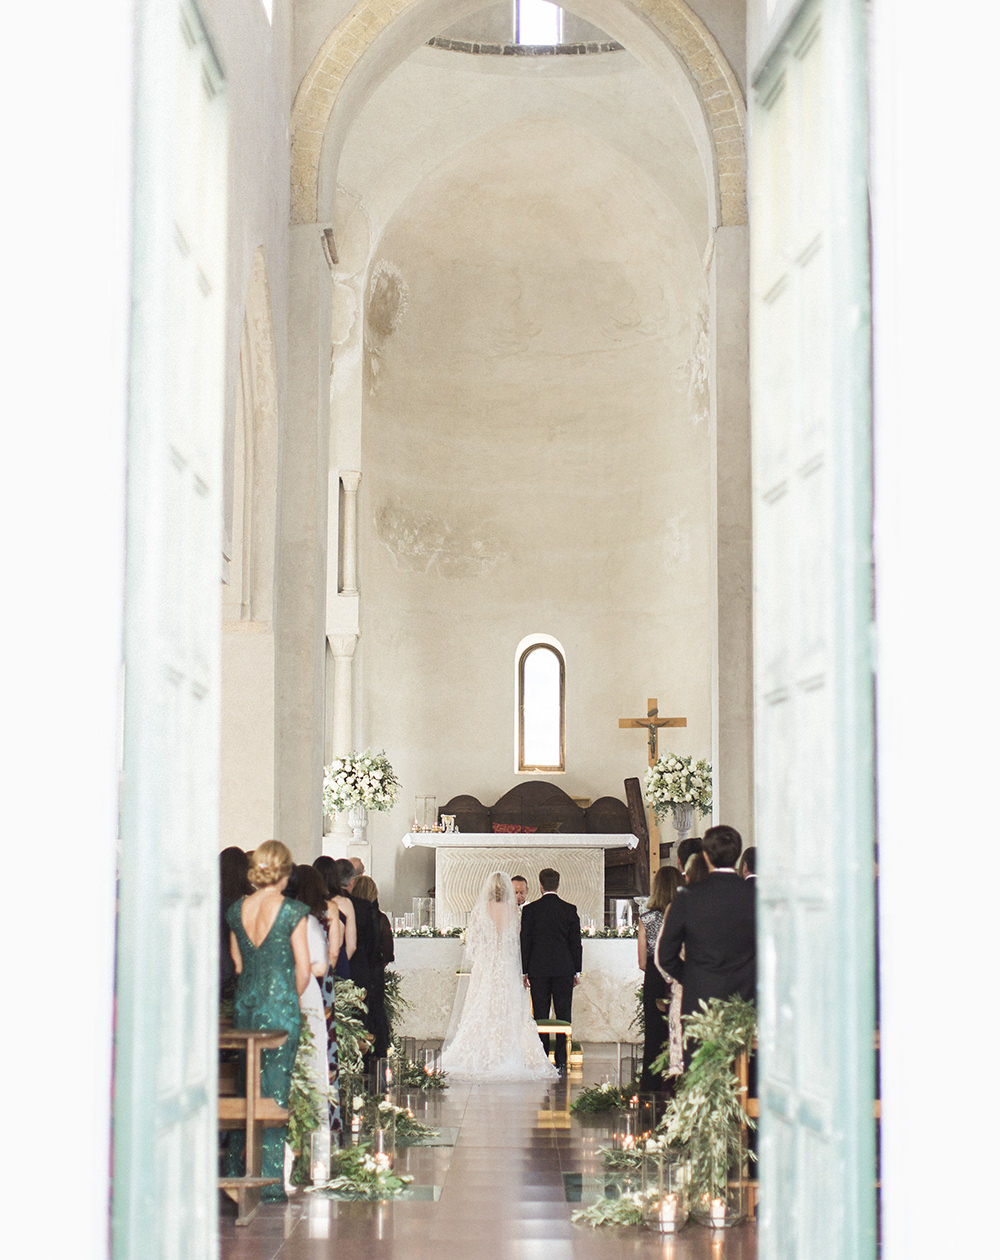 Catholic weddings in Italy